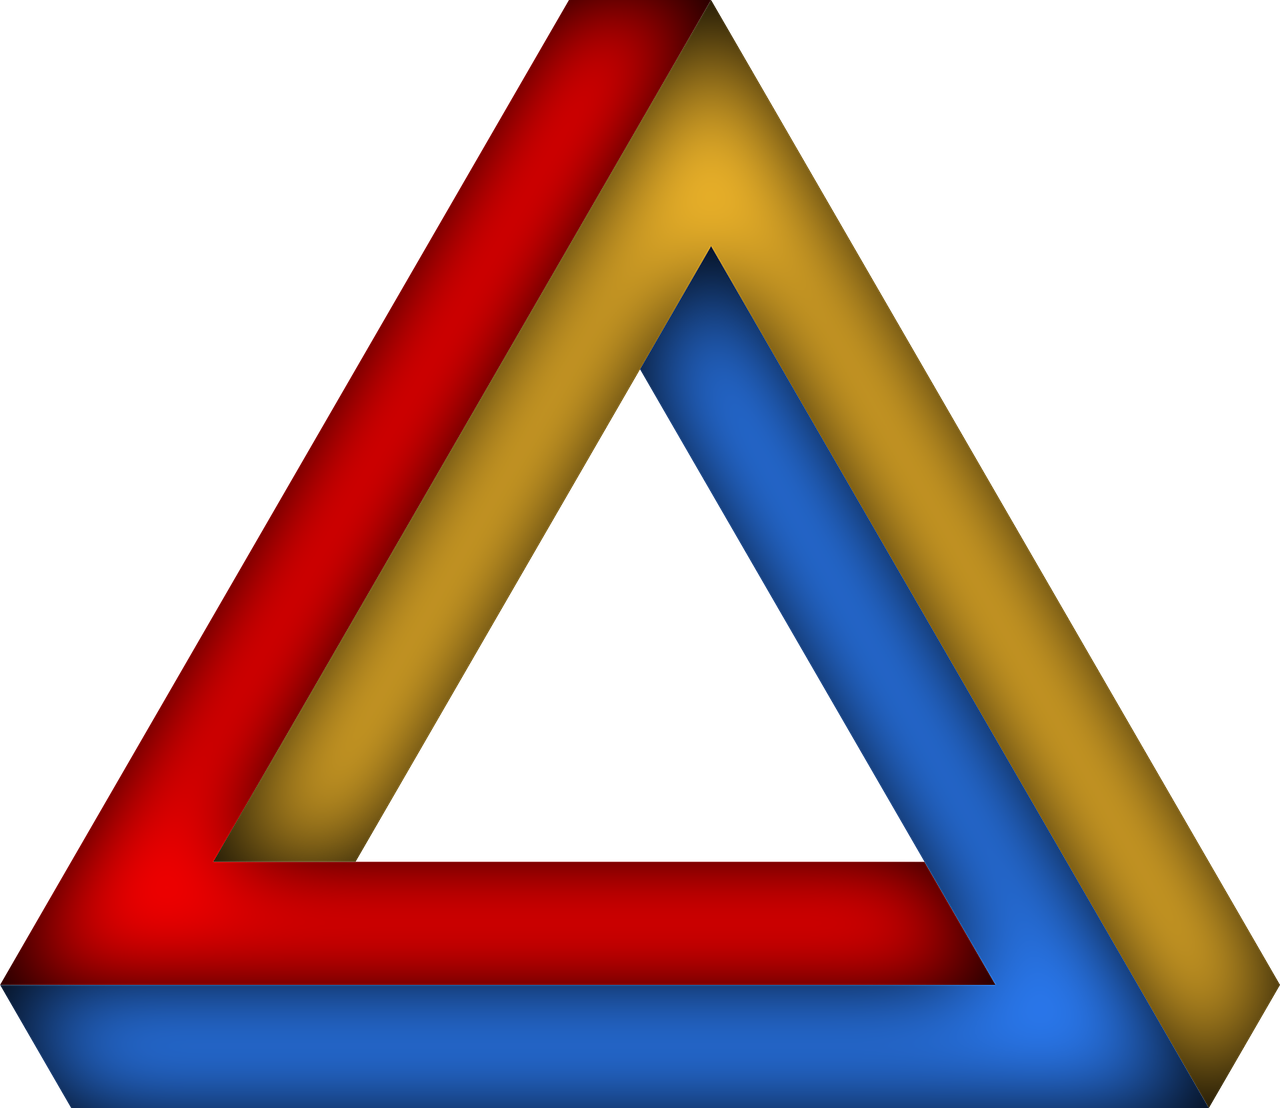 penrose triangle the impossible triangle optical deception free photo